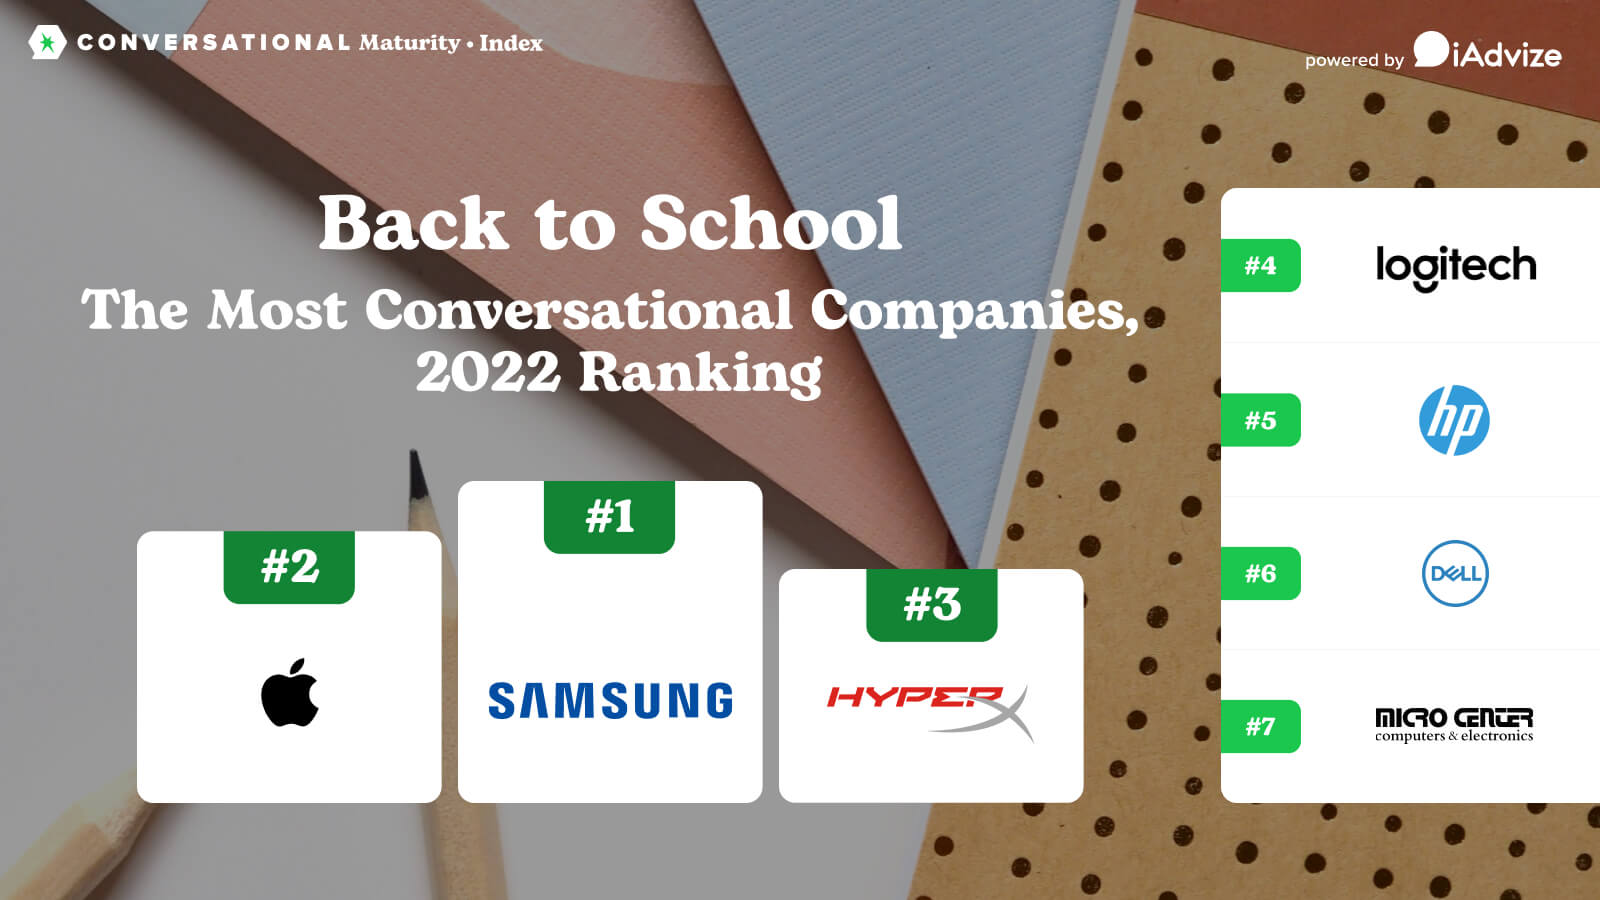 Conversational Maturity Index: Back to School Companies 2022 Ranking